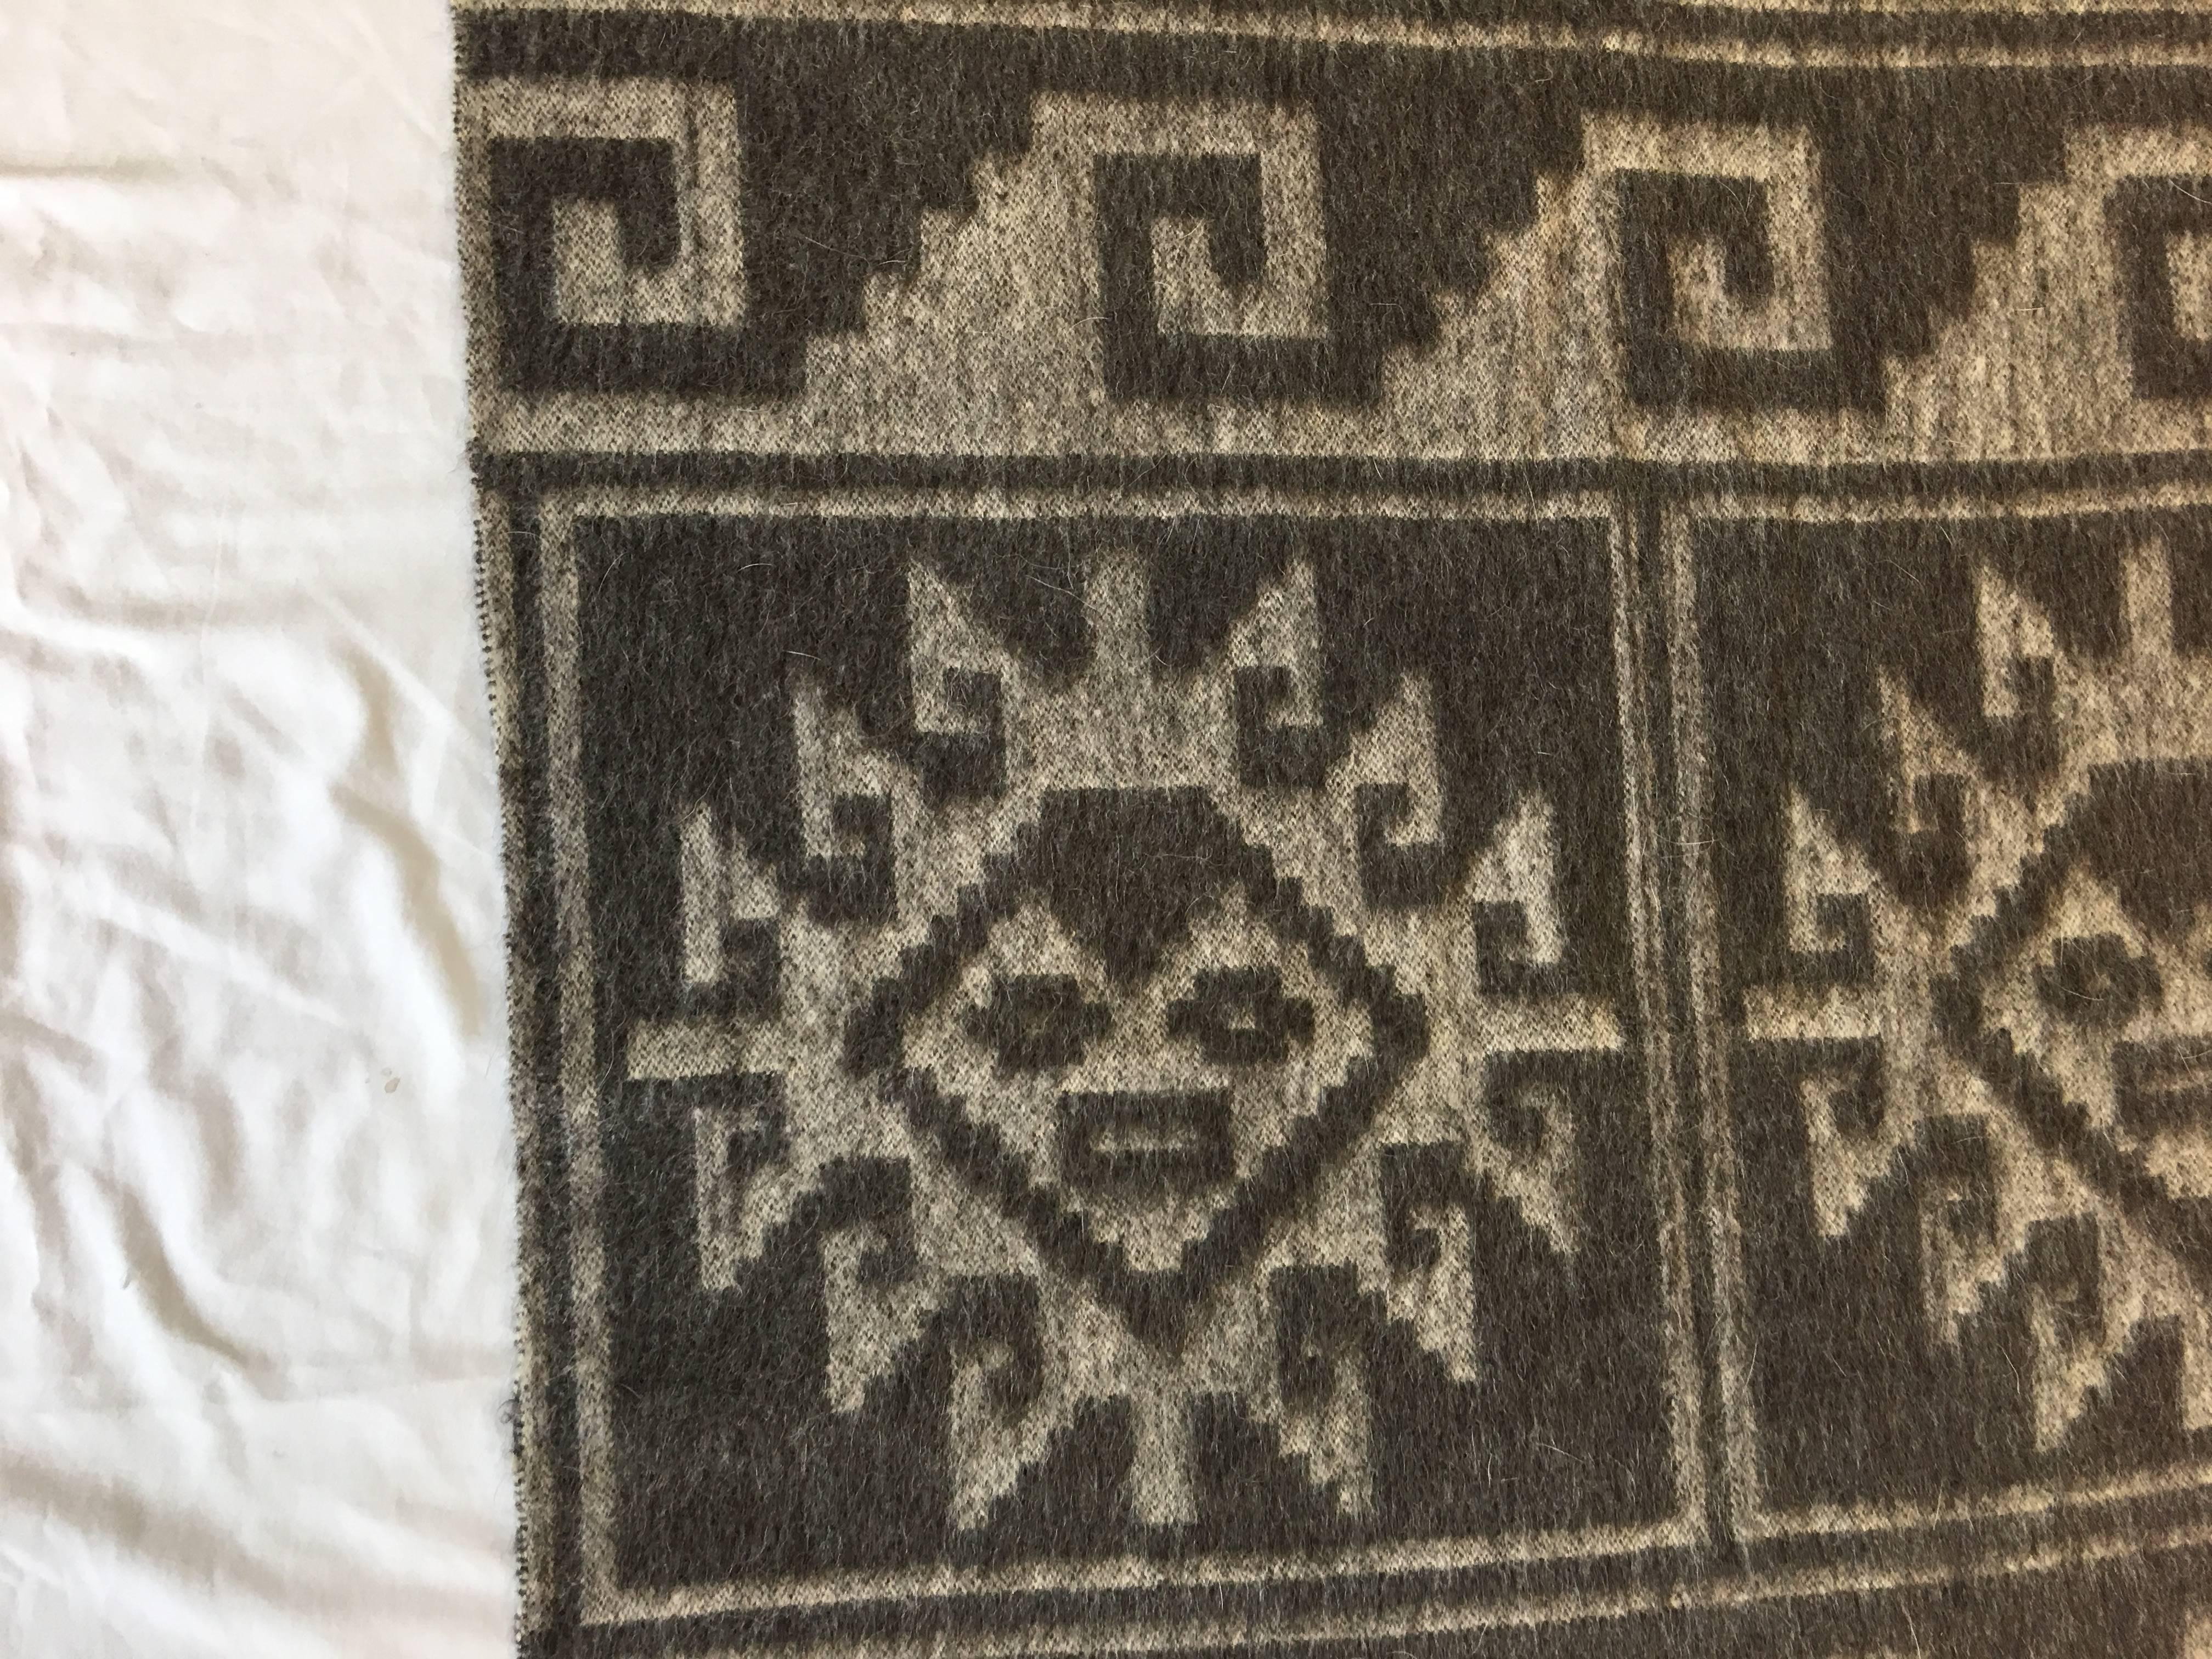 Woven 1950s Gray Monochrome Alpaca Wool Throw Blanket with Aztec Design